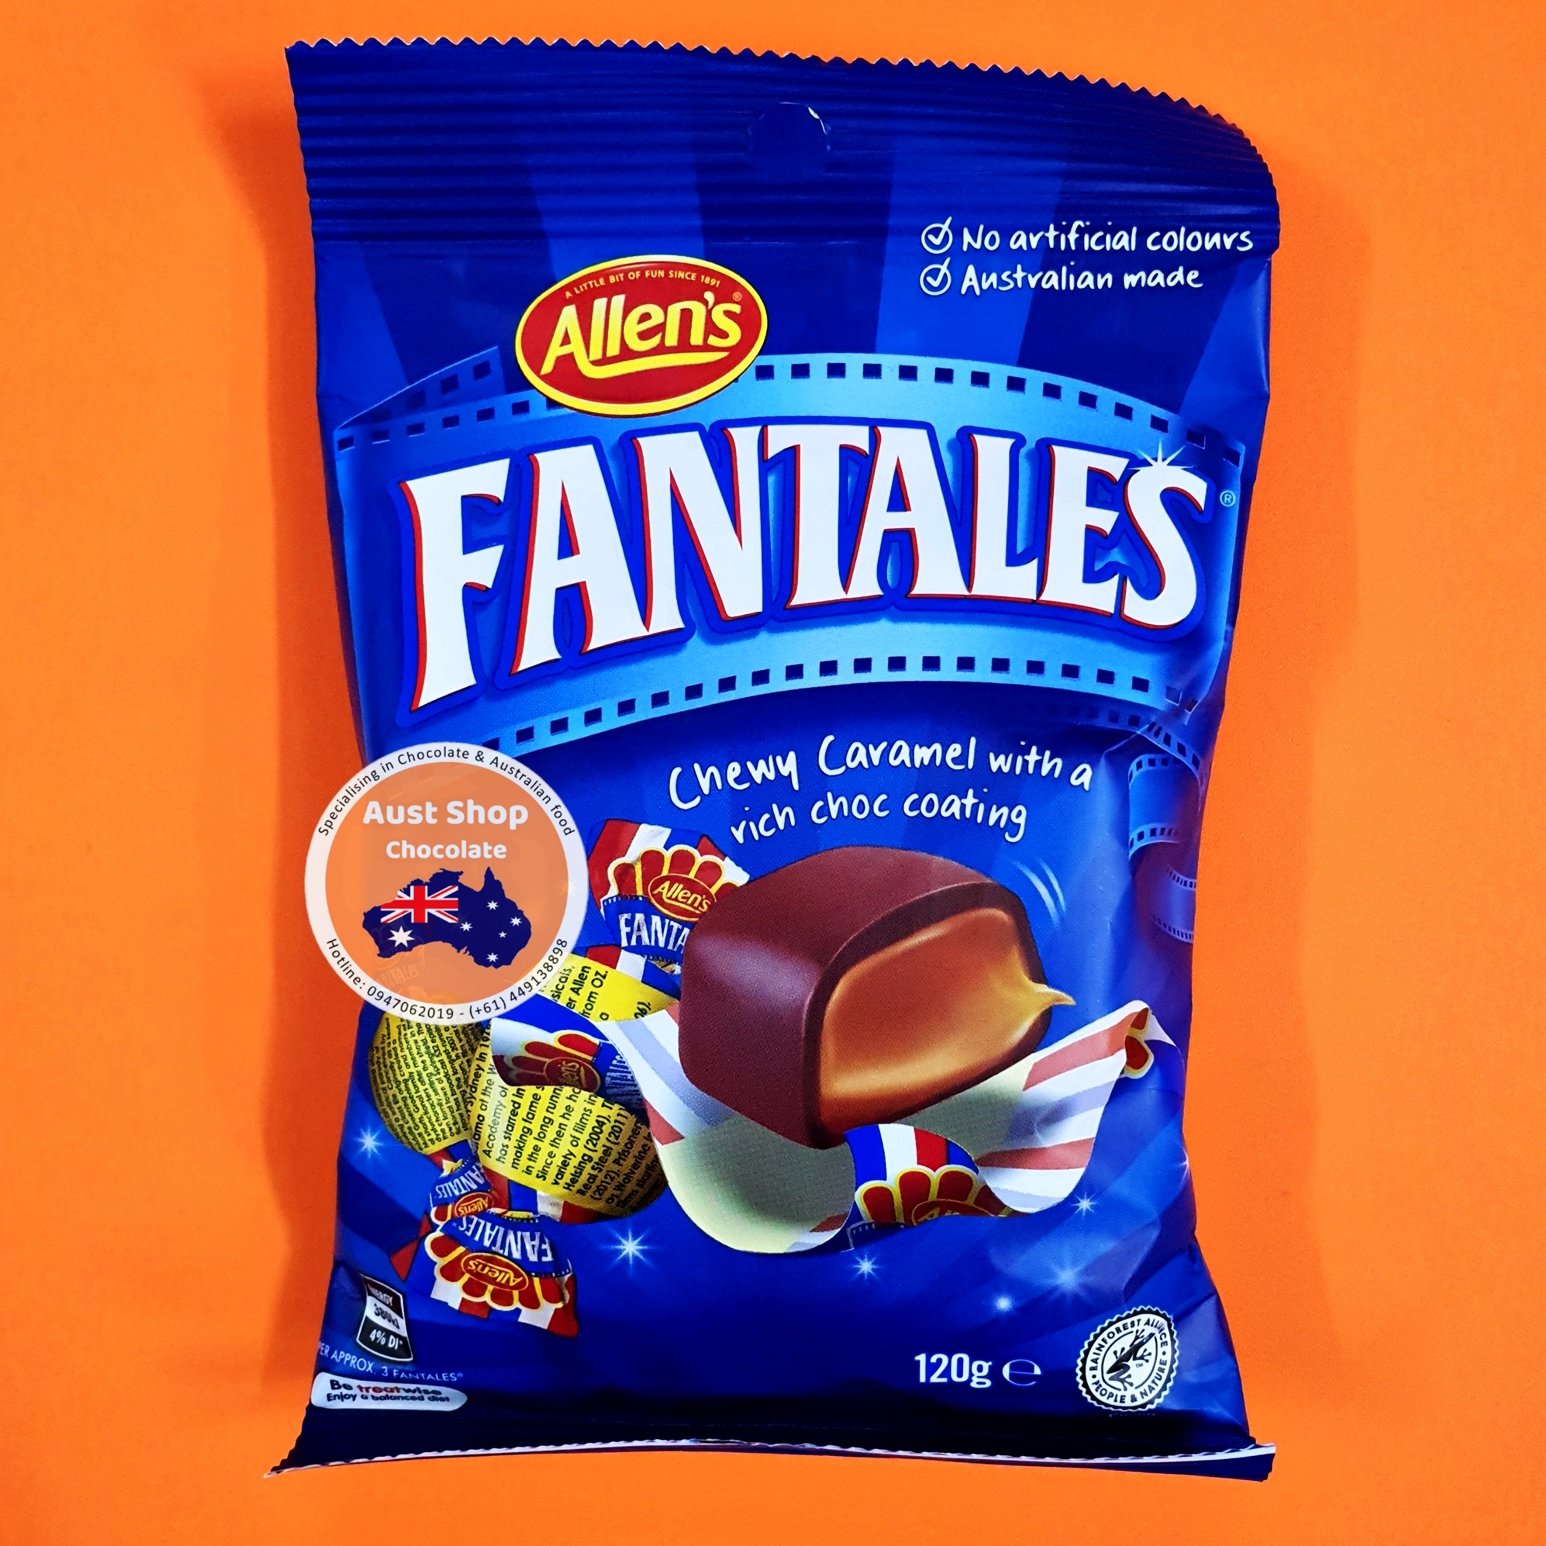 Allen's Fantales 120g - Kẹo socola nhân caramel - Australian stock - Aust Shop Chocolate